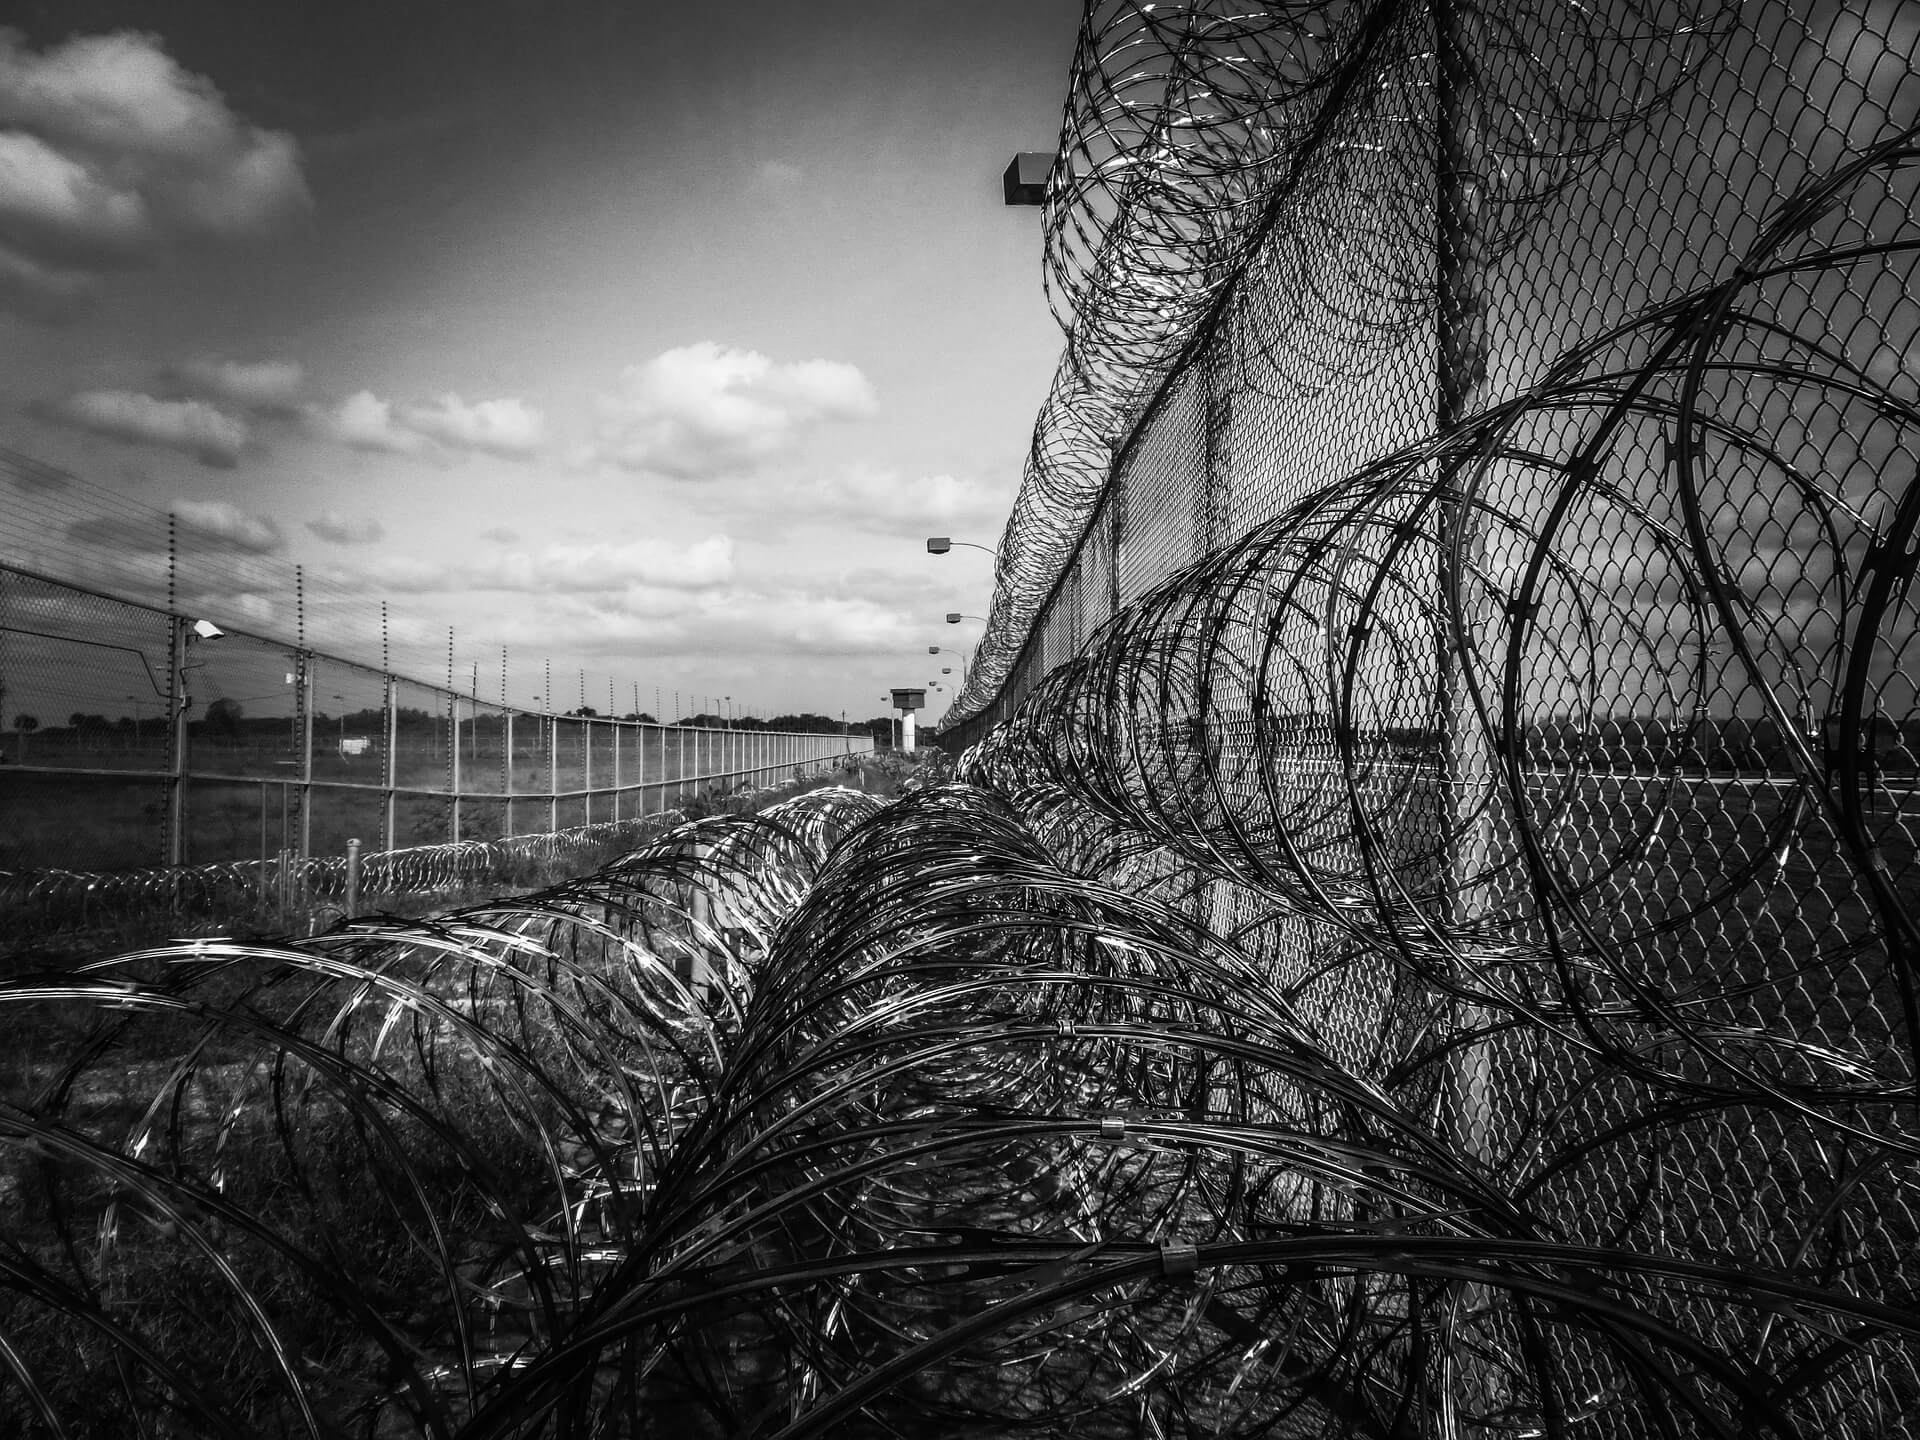 Farmington Man Gets Prison and Fine